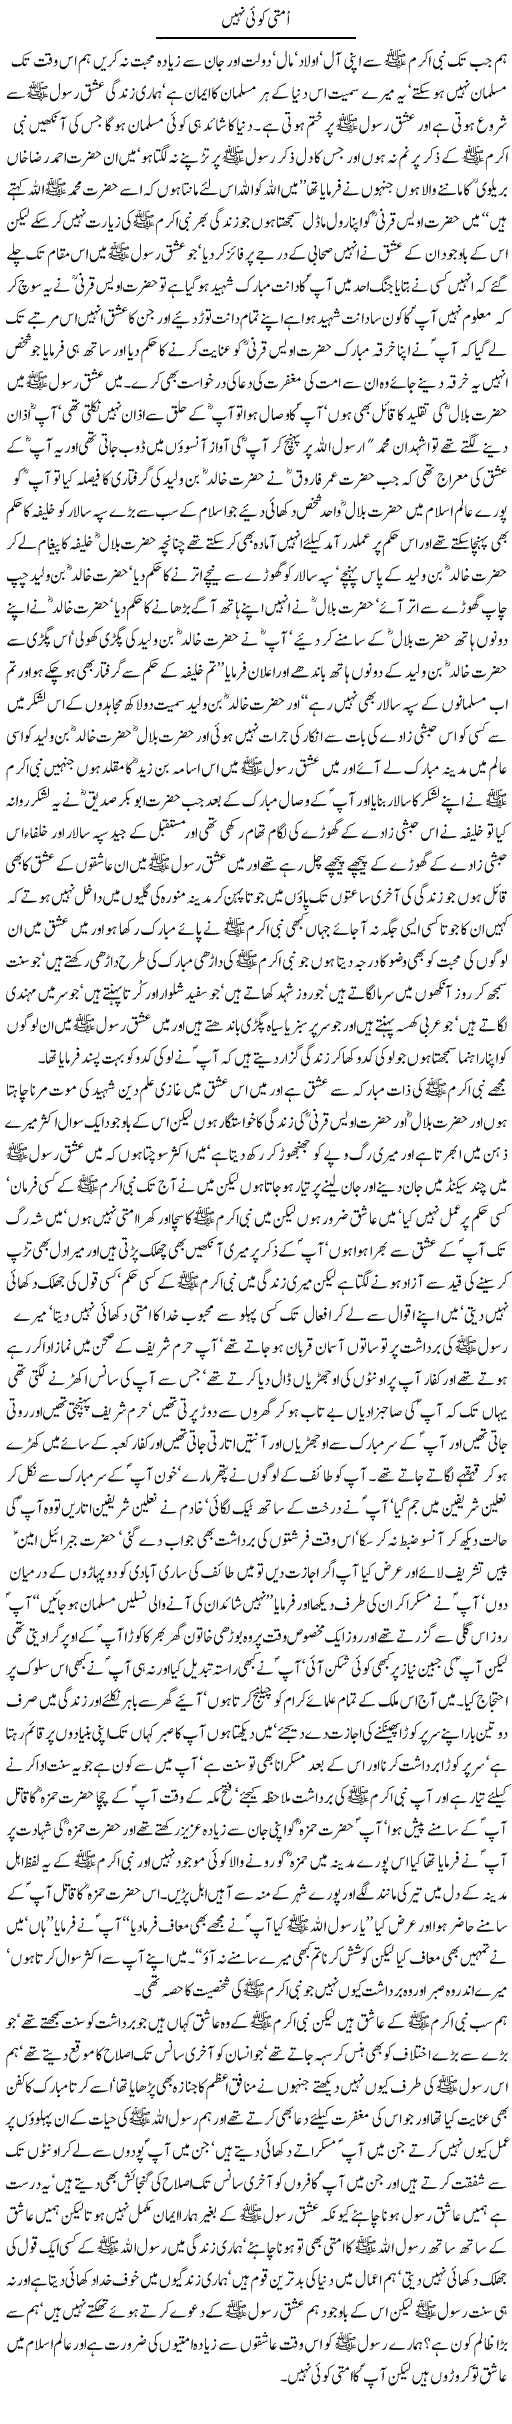 Ummah of Prophet Express Column Javed Chaudhry 6 January 2011